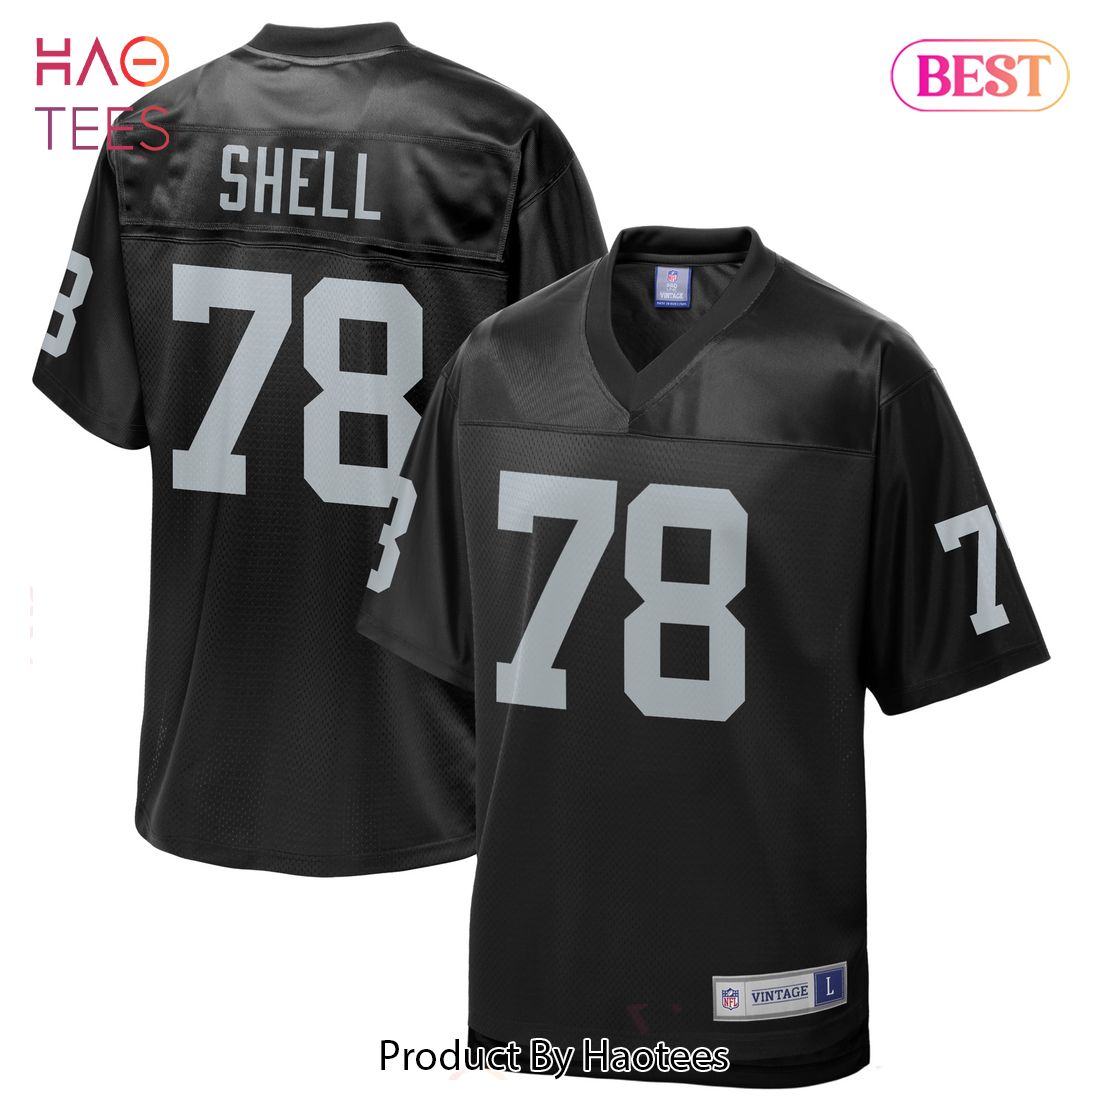 Art Shell Las Vegas Raiders NFL Pro Line Replica Retired Player Jersey Black